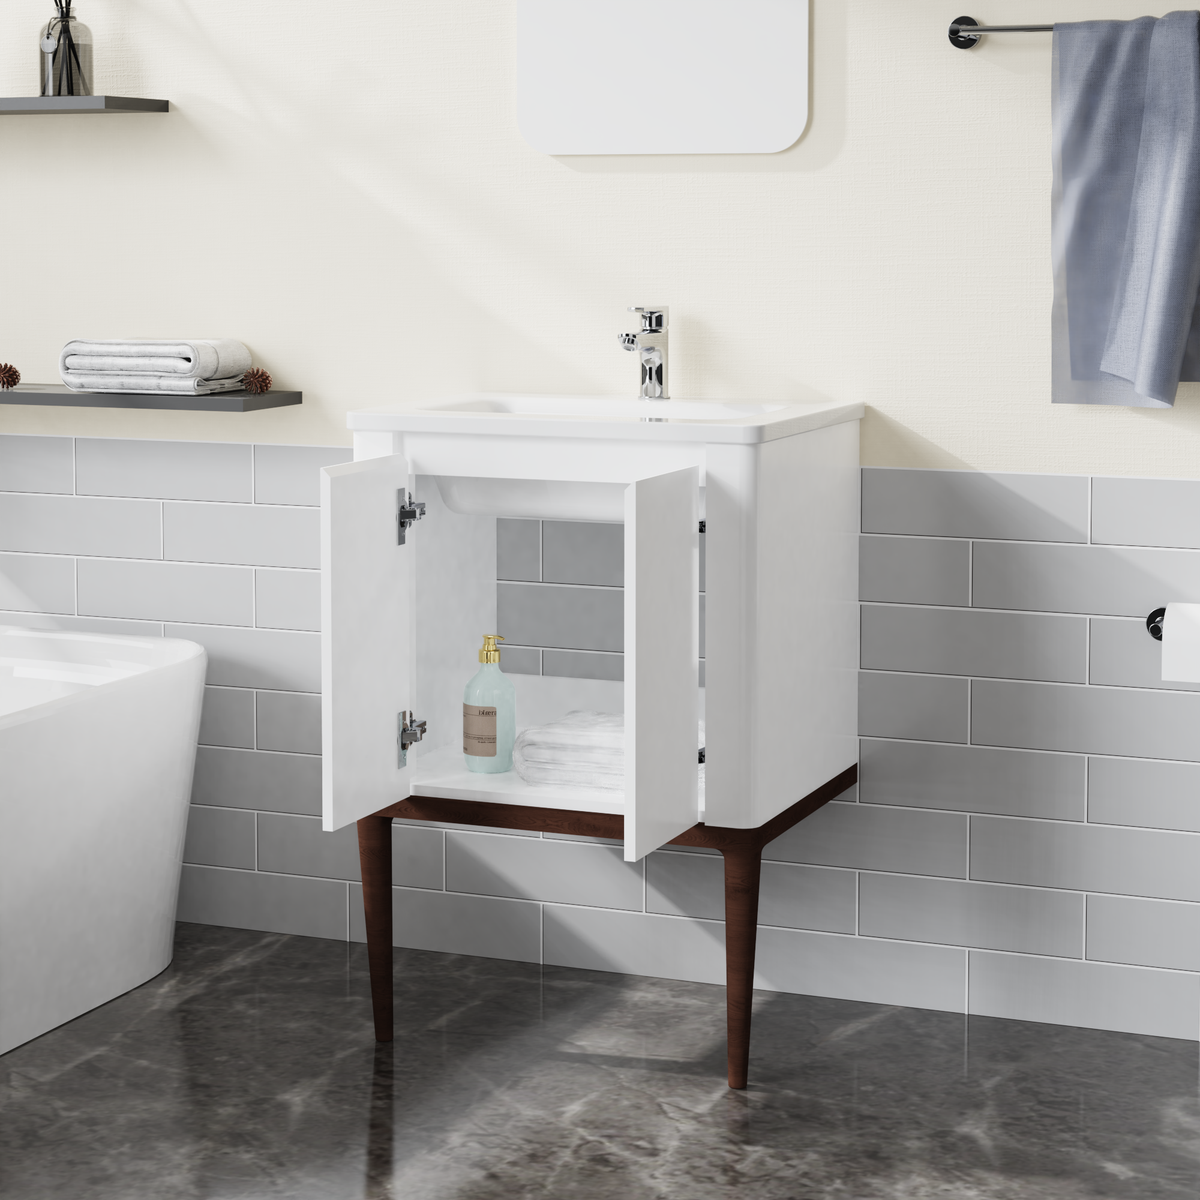 24” White Bathroom Vanity with Sink Combo Painting Wood Vanity Unit